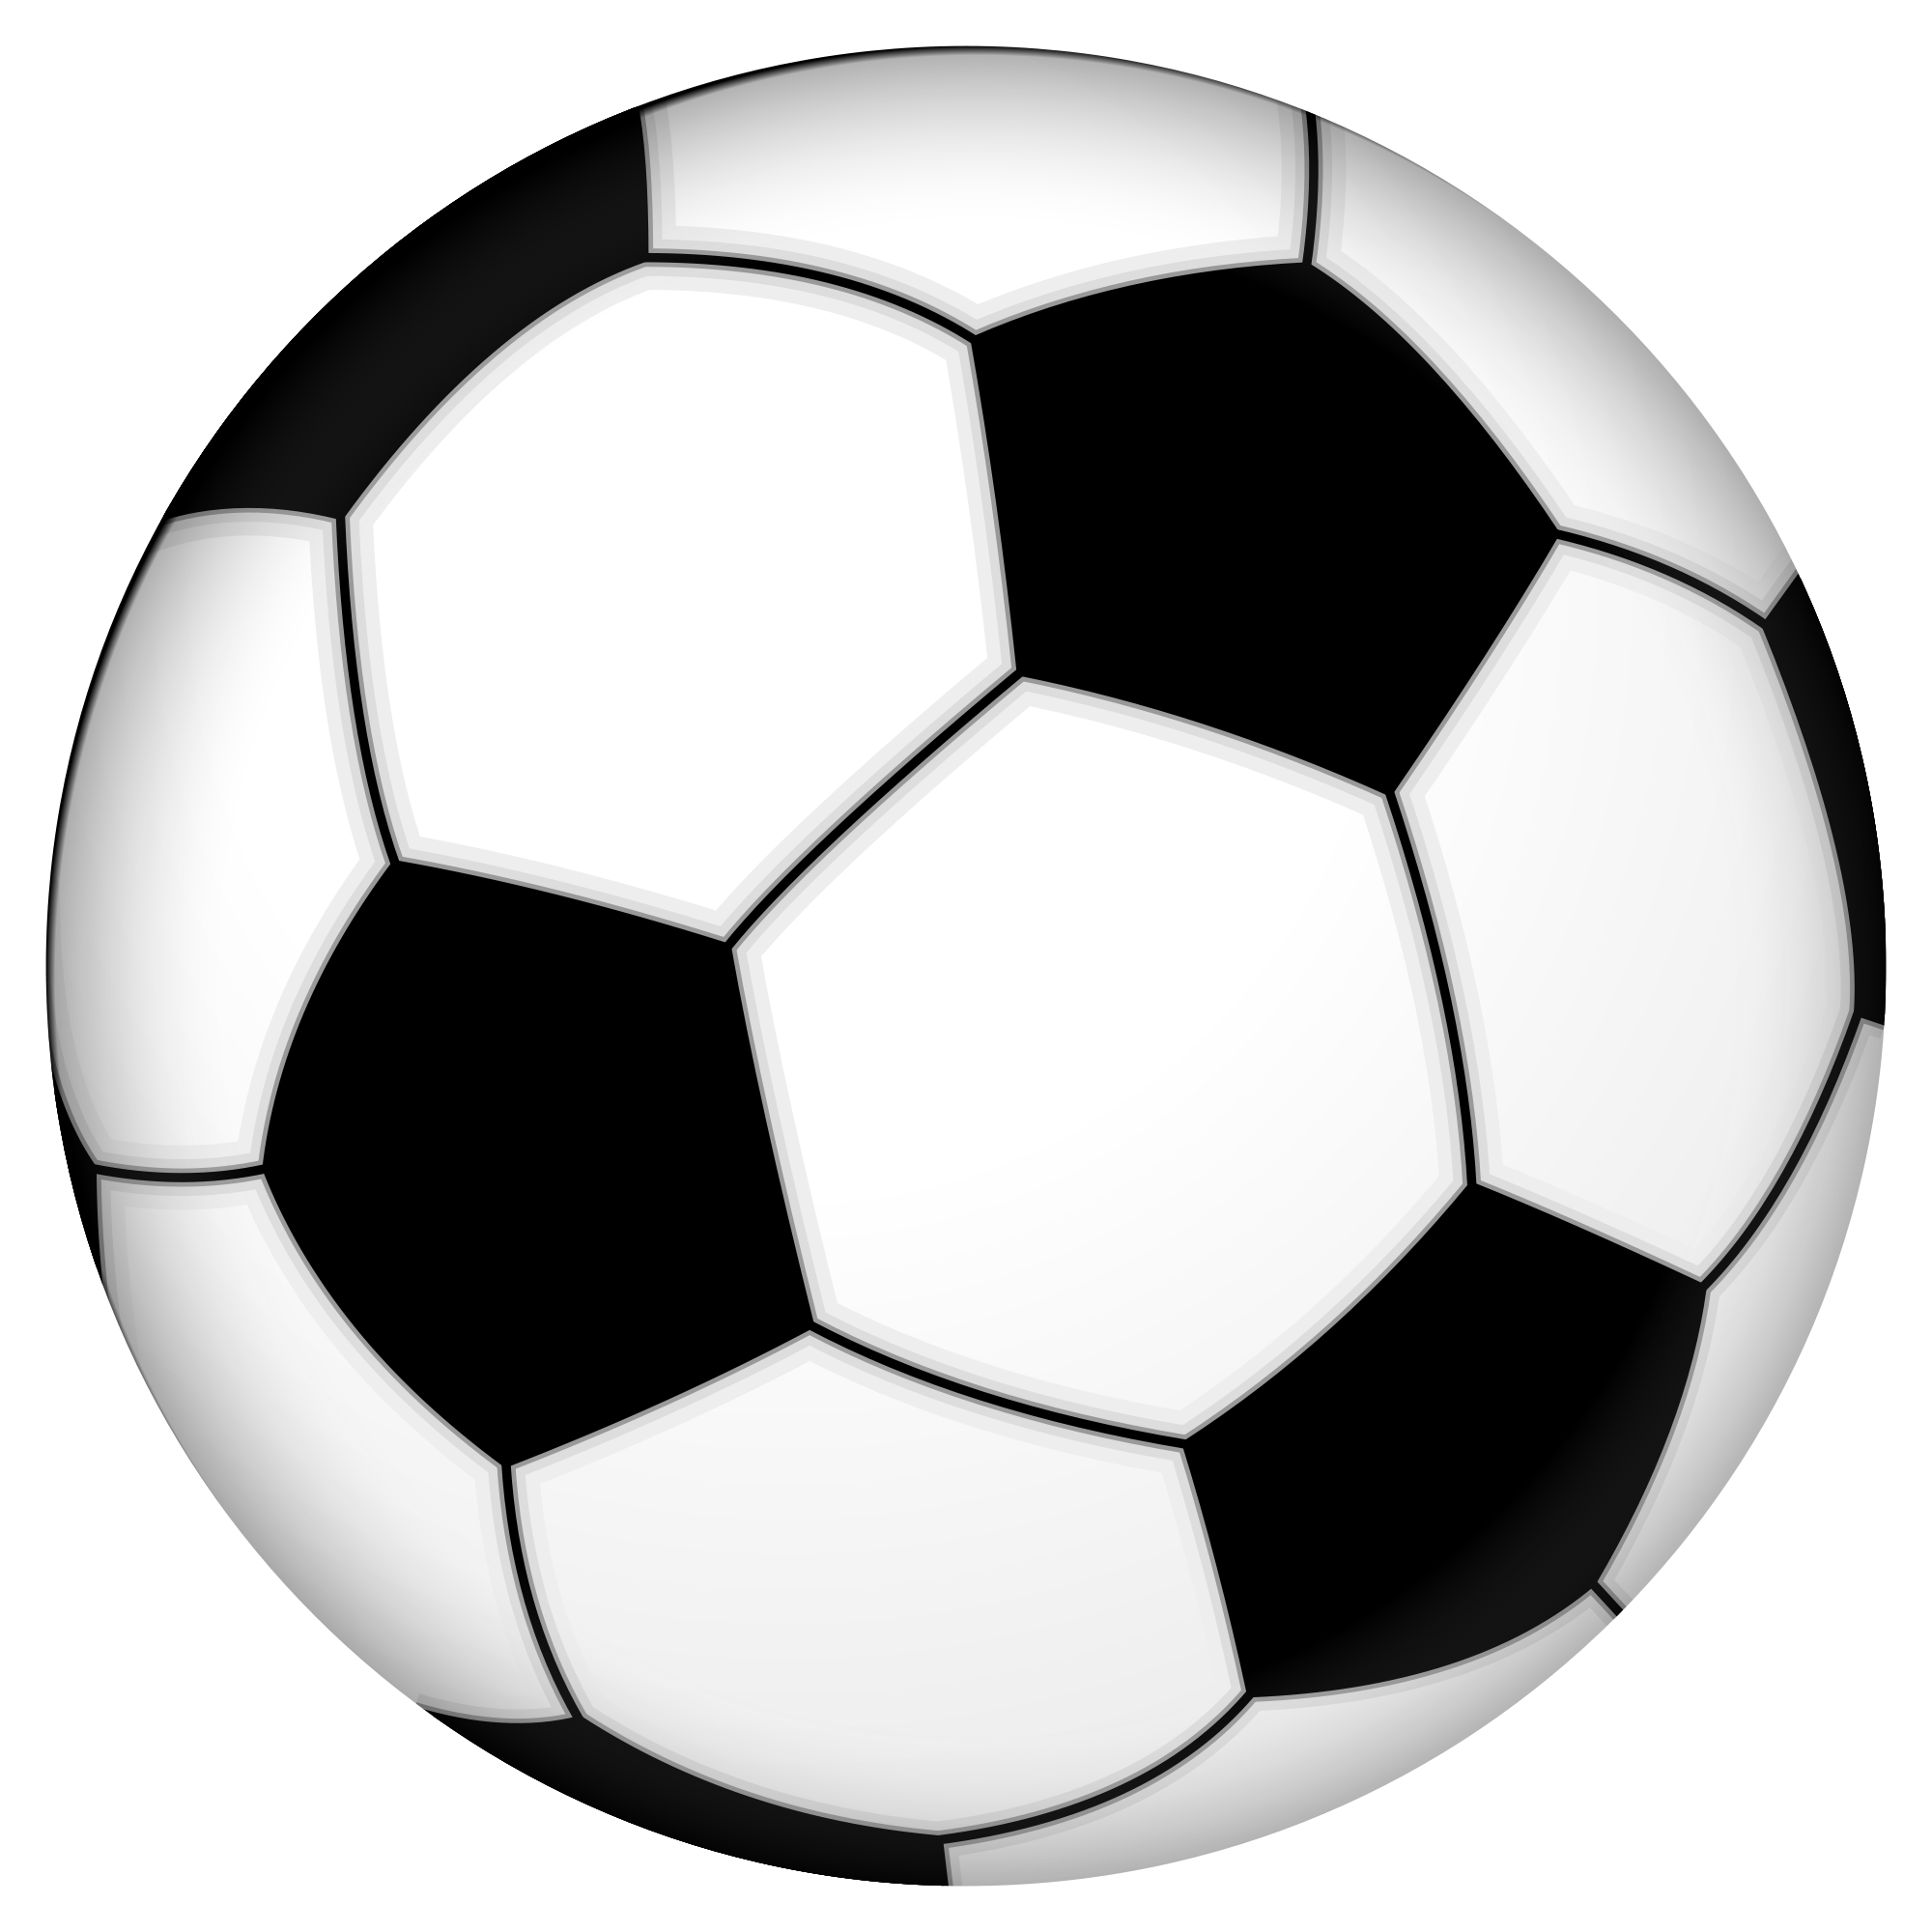 File:Soccerball - Wikimedia Commons